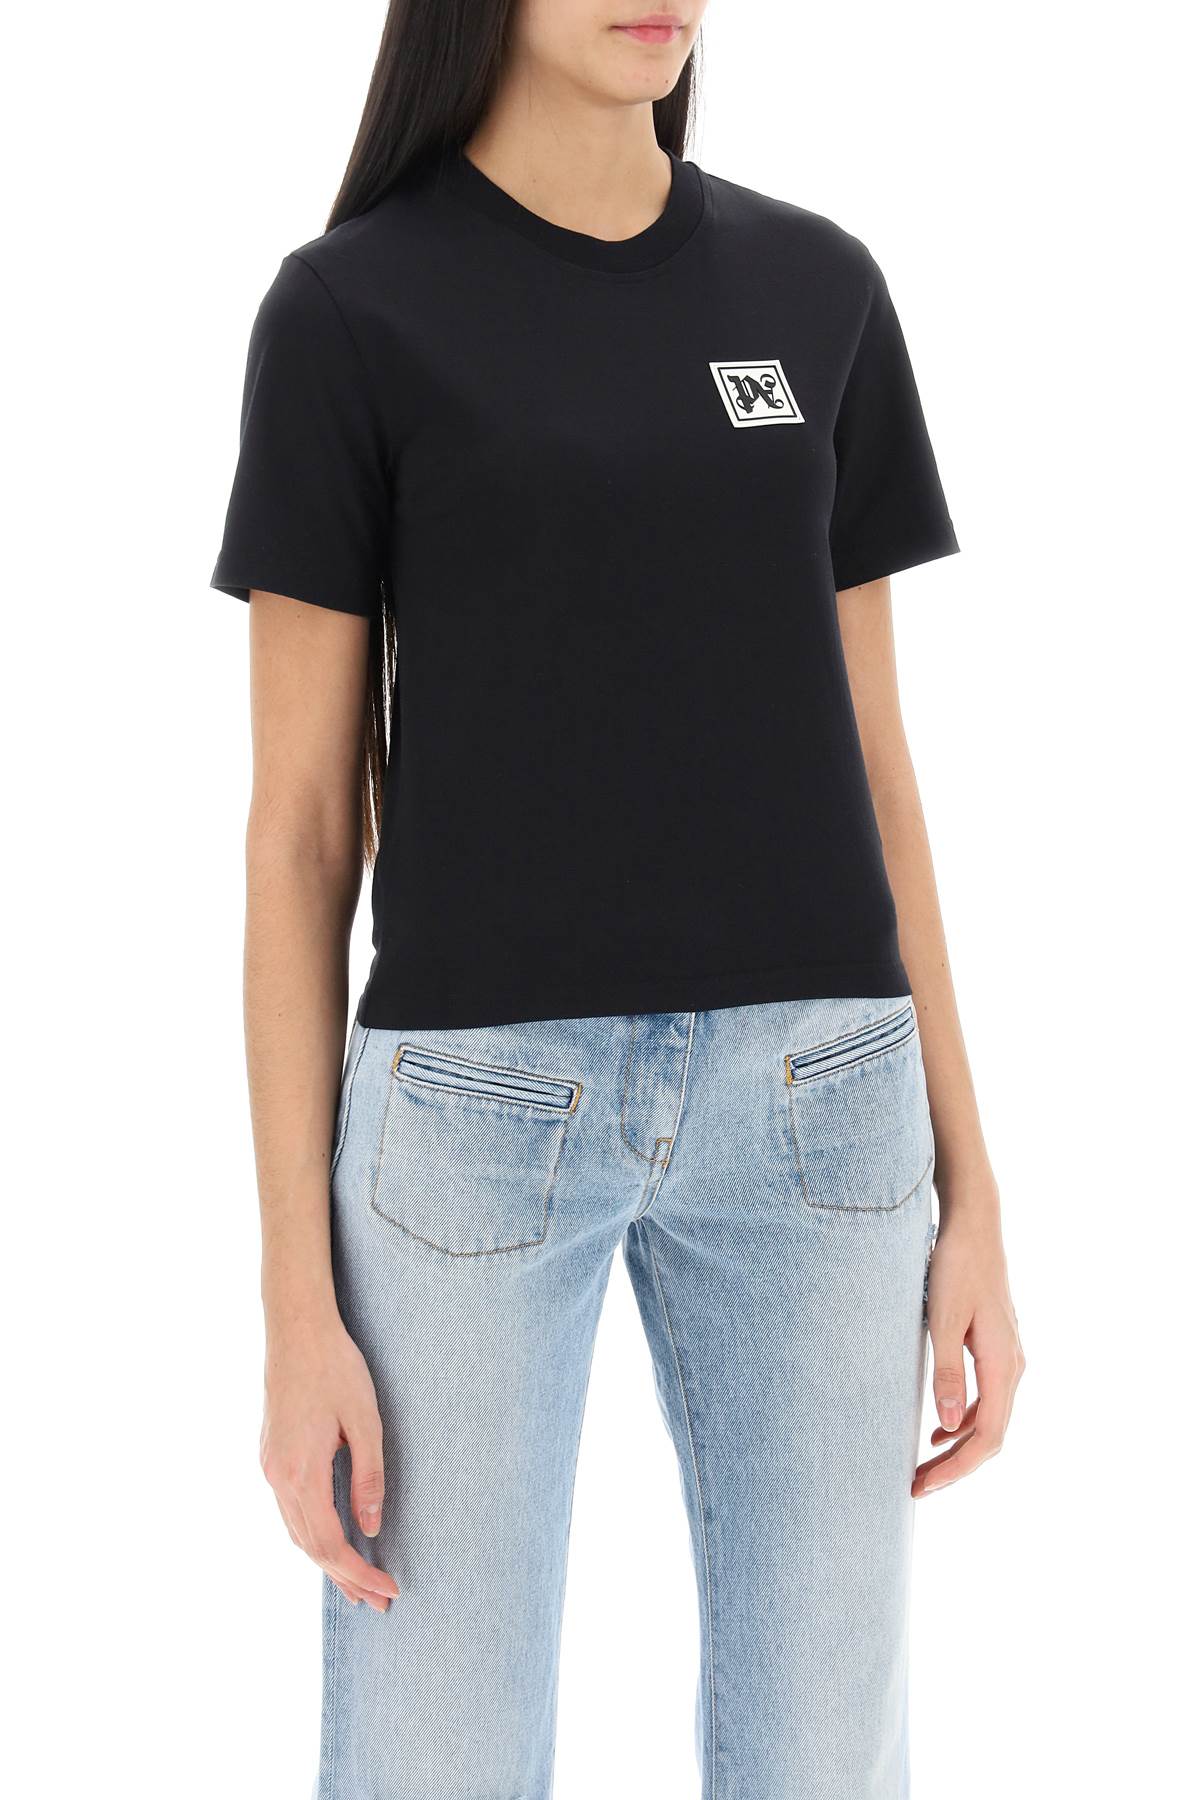 Shop Palm Angels Ski Club T-shirt In Black/white